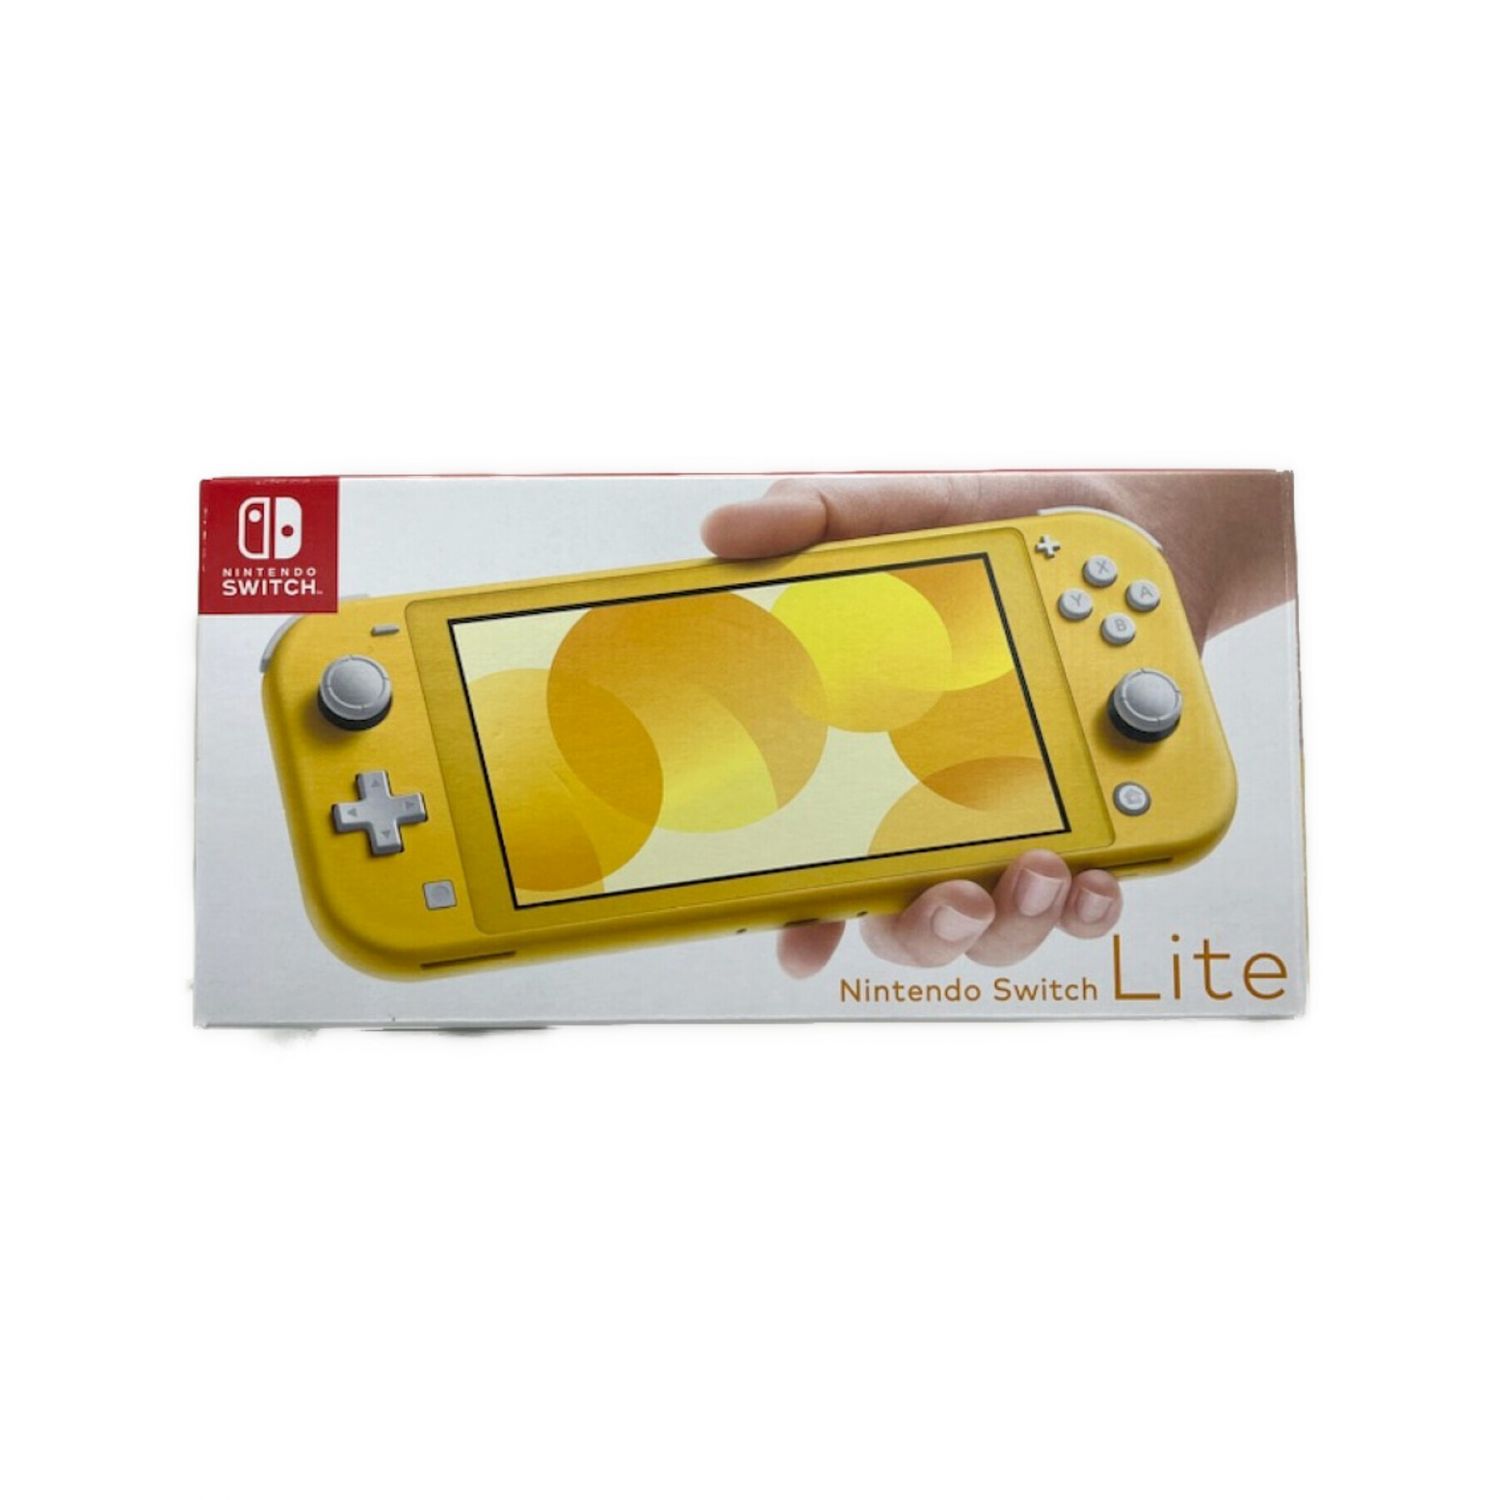 Nintendo (ニンテンドウ) Nintendo Switch Lite イエロー HDH-001 